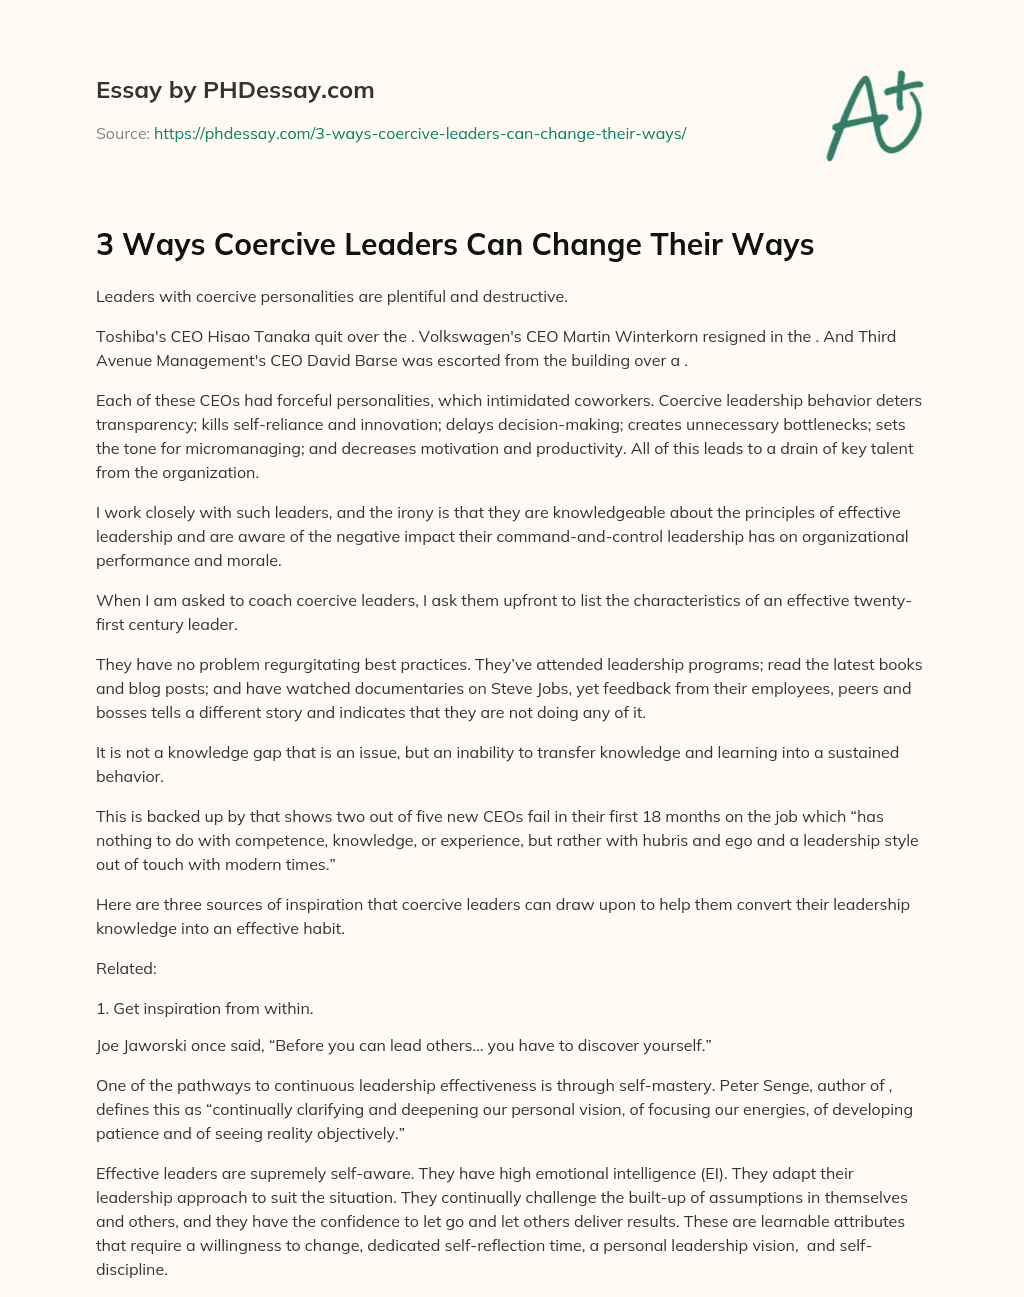 3 Ways Coercive Leaders Can Change Their Ways essay